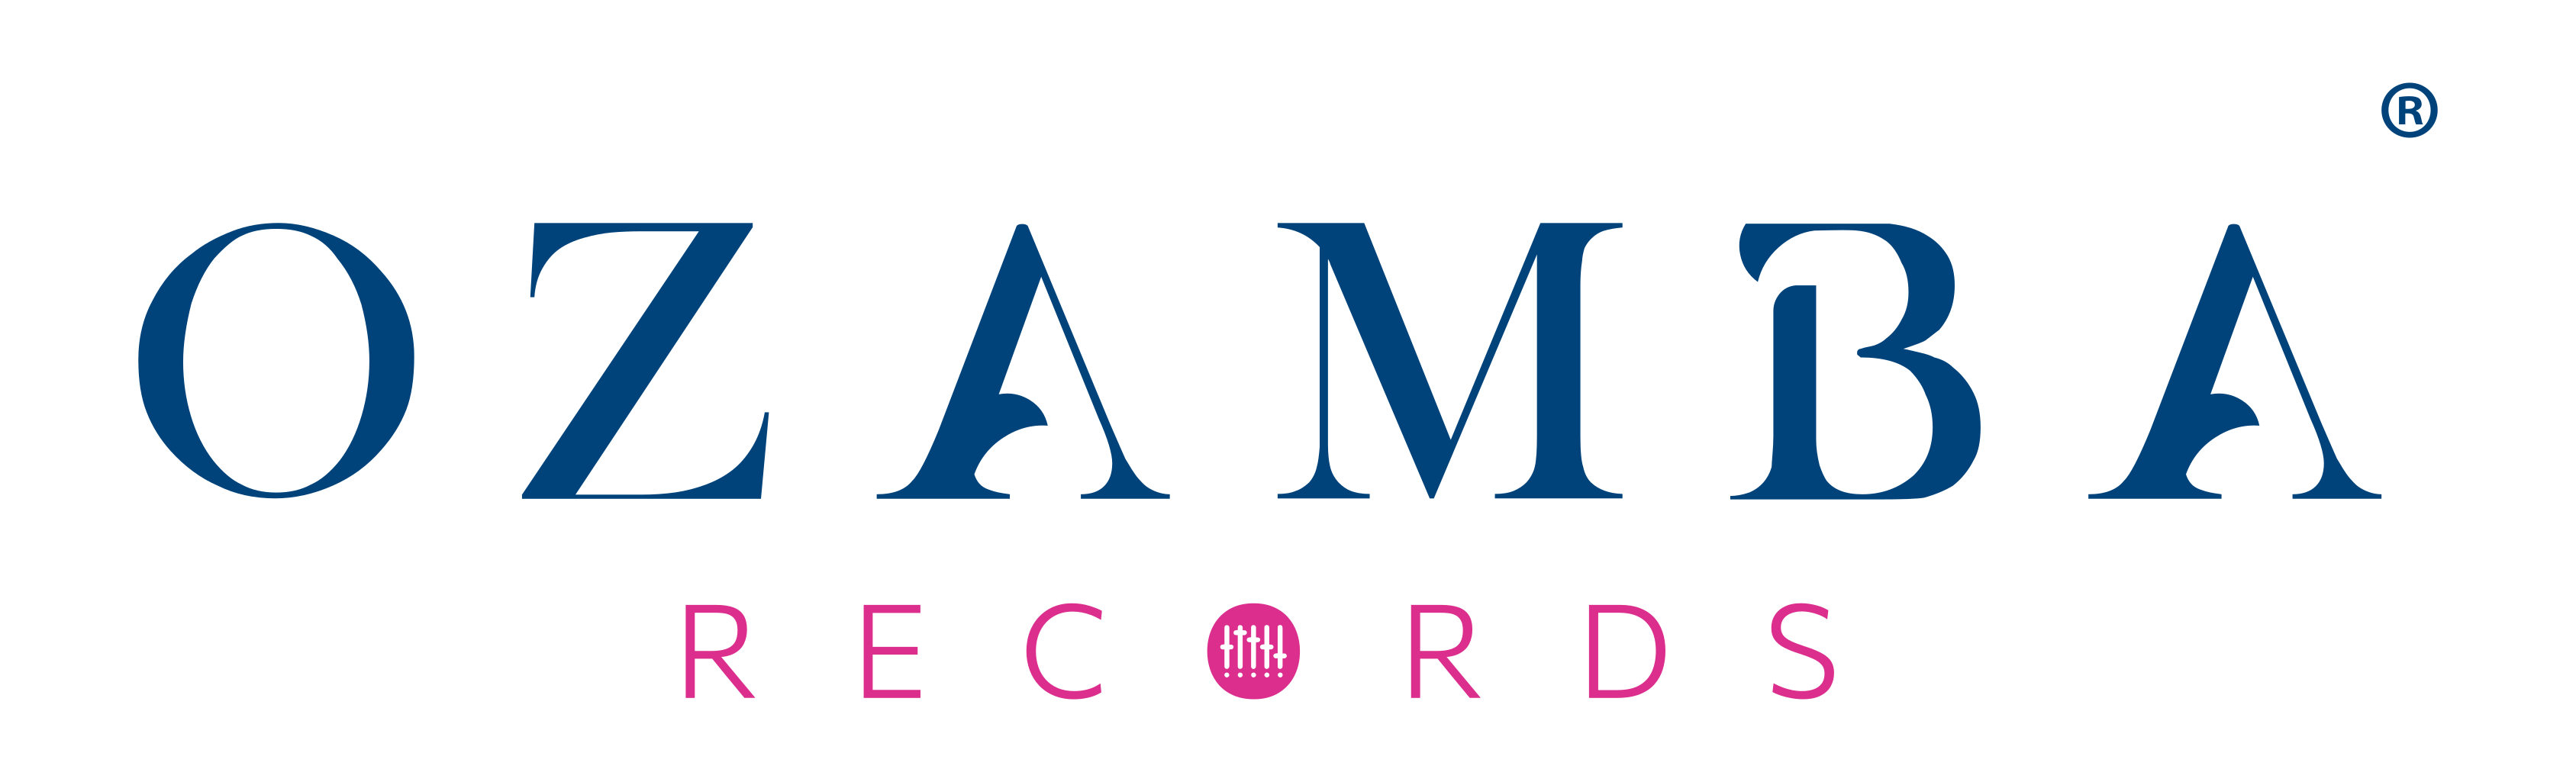 Ozamba Records